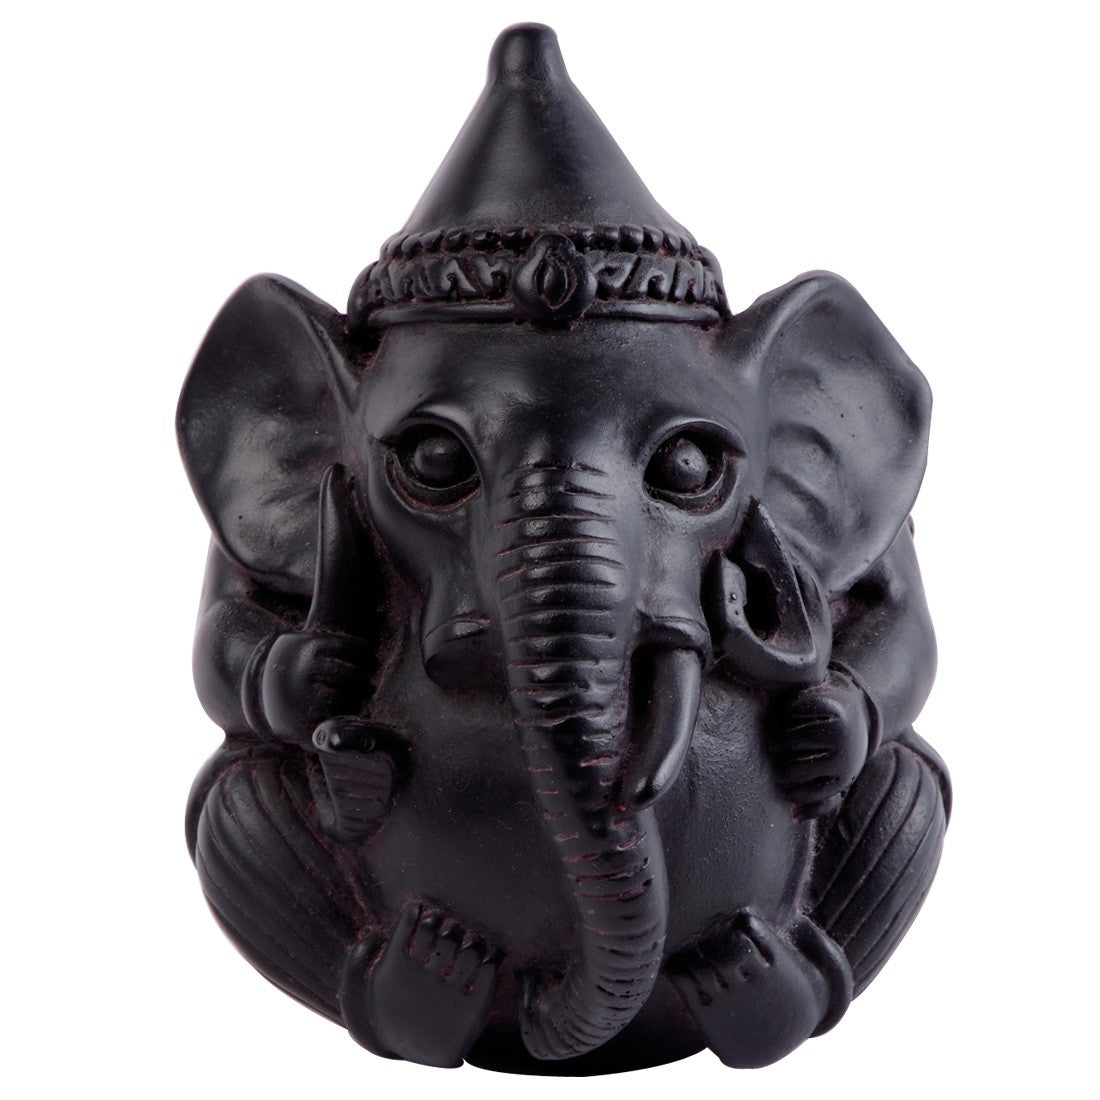 Benevolent Elephant - Resin - Original Source